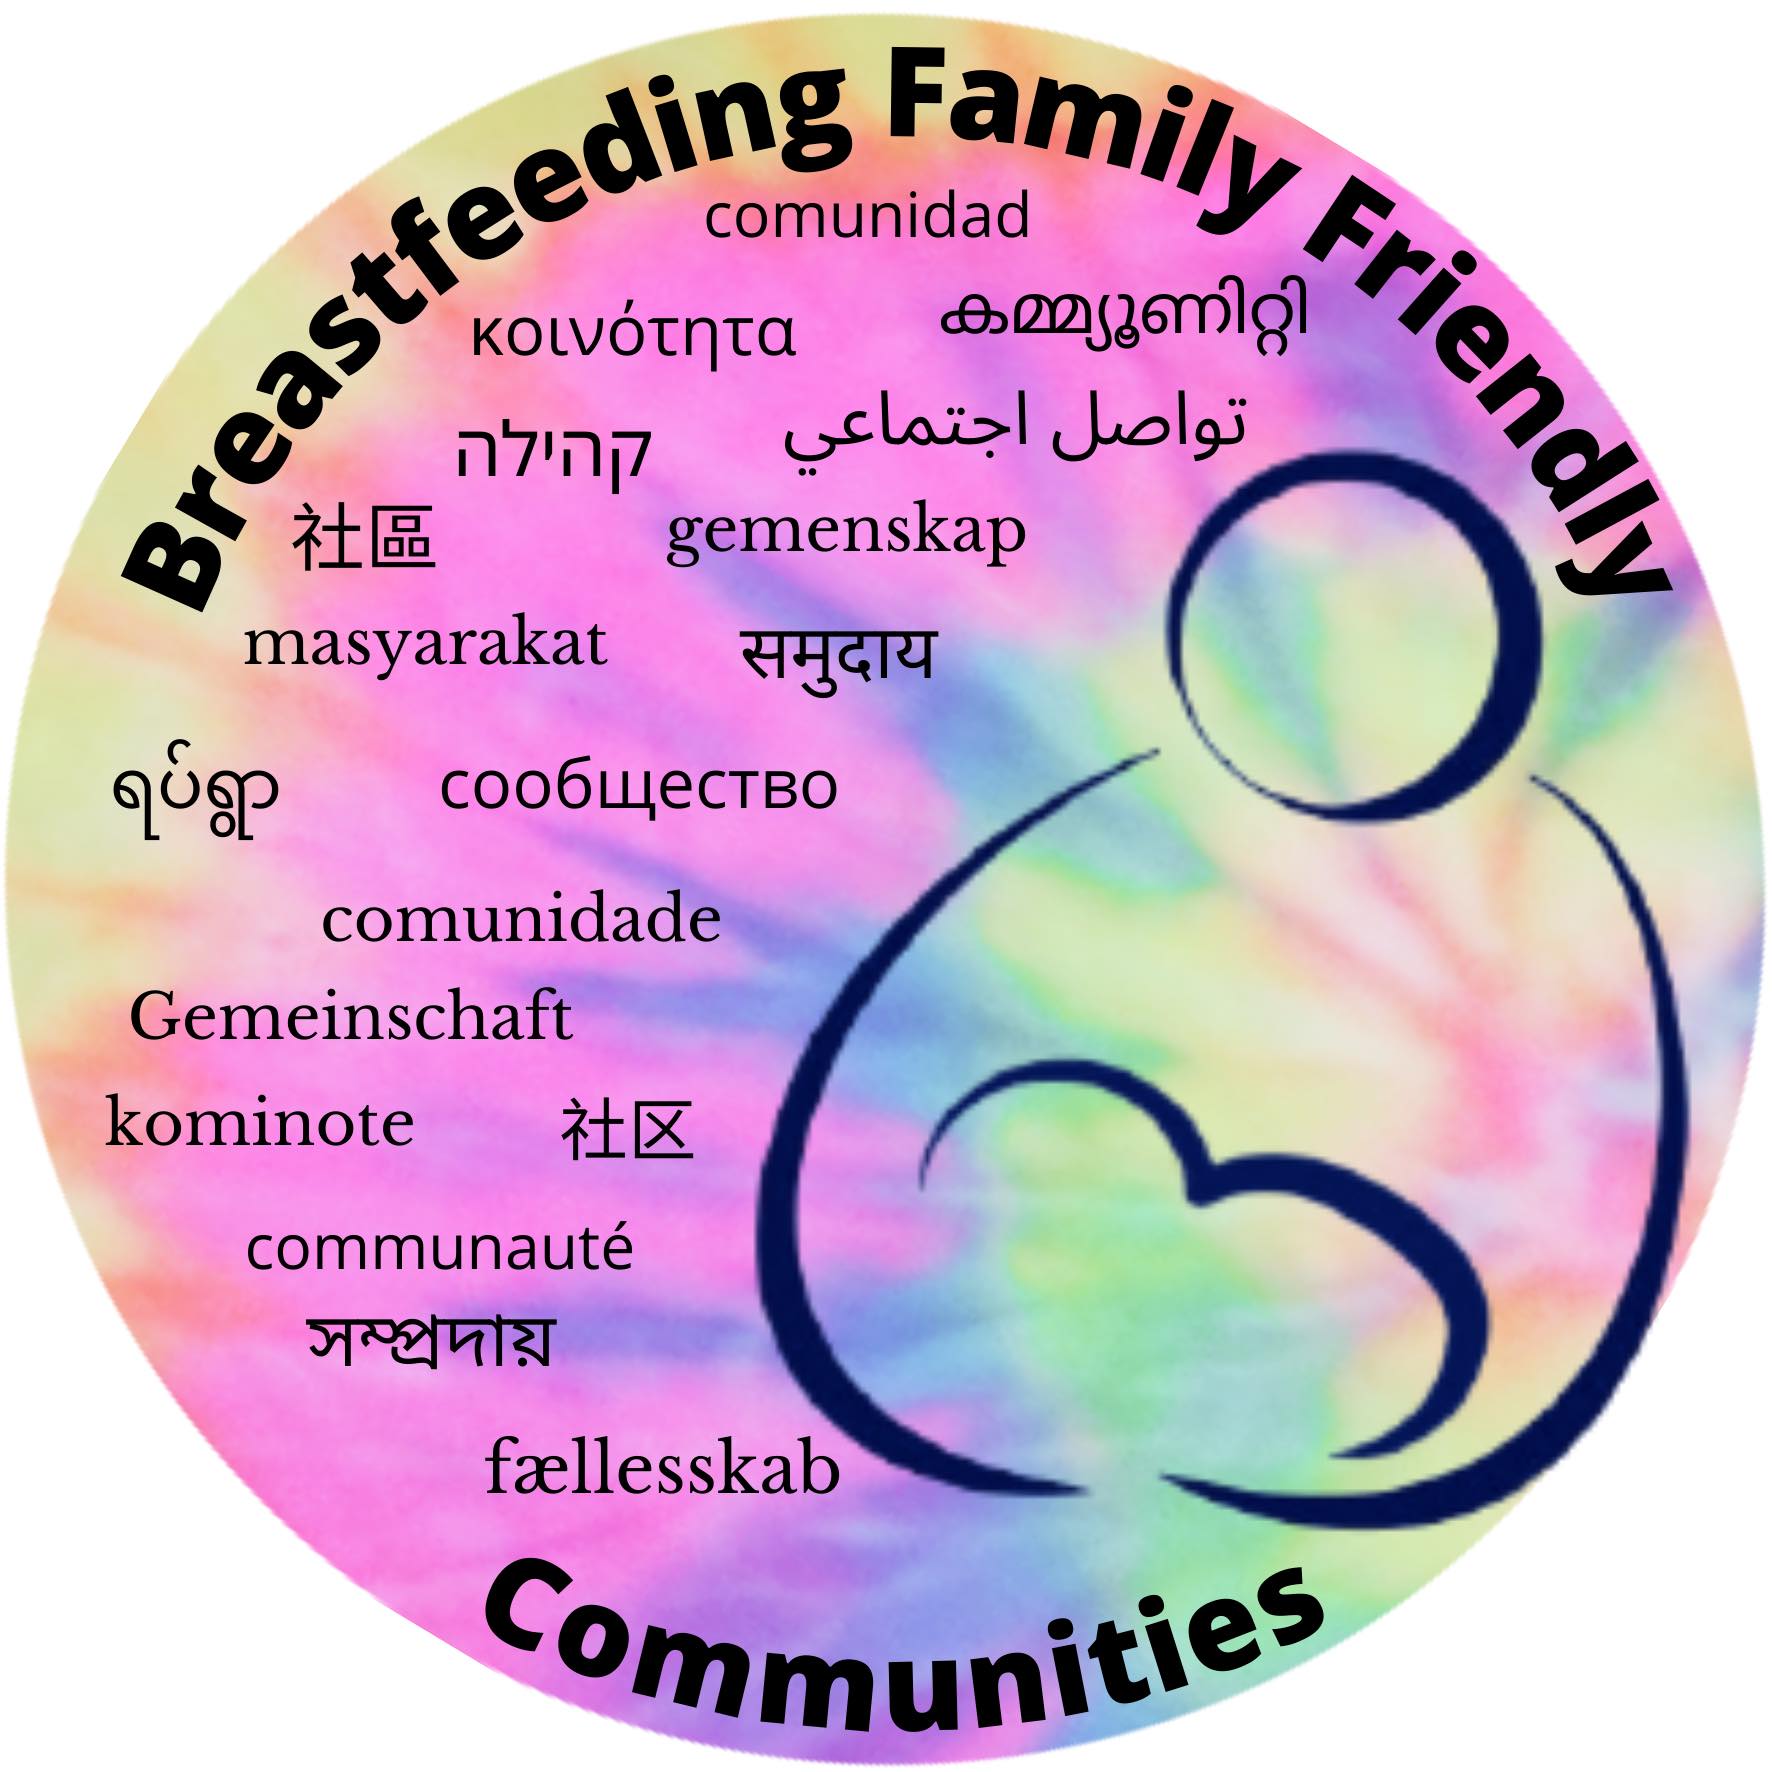 Breastfeeding Family Friendly Communities